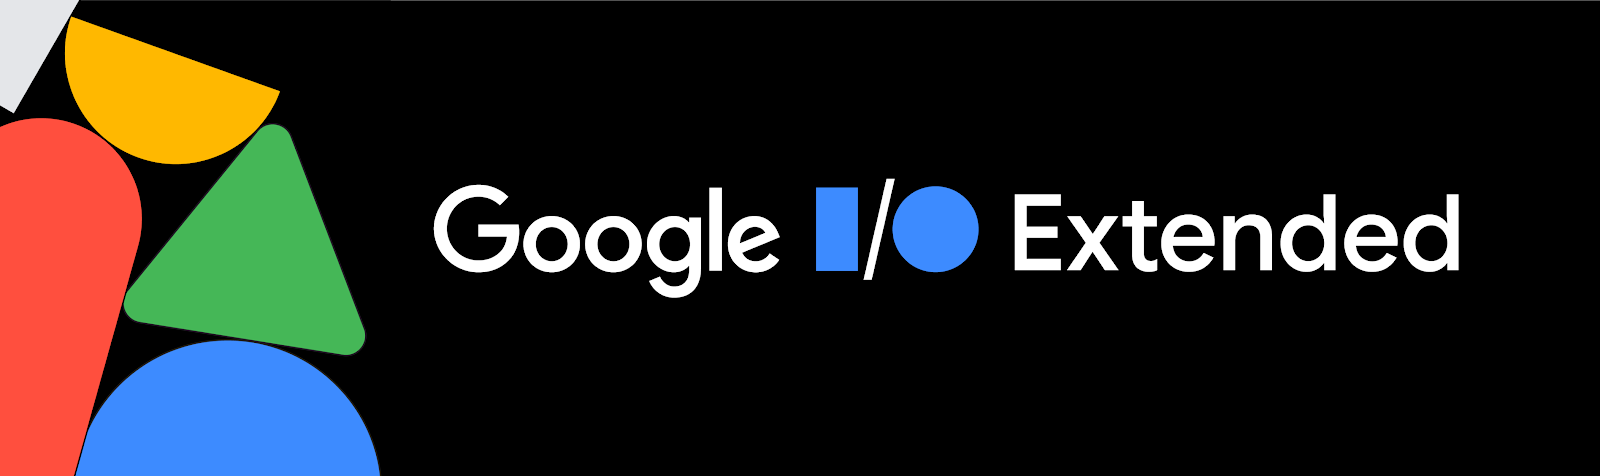 Google IO Extended - Header